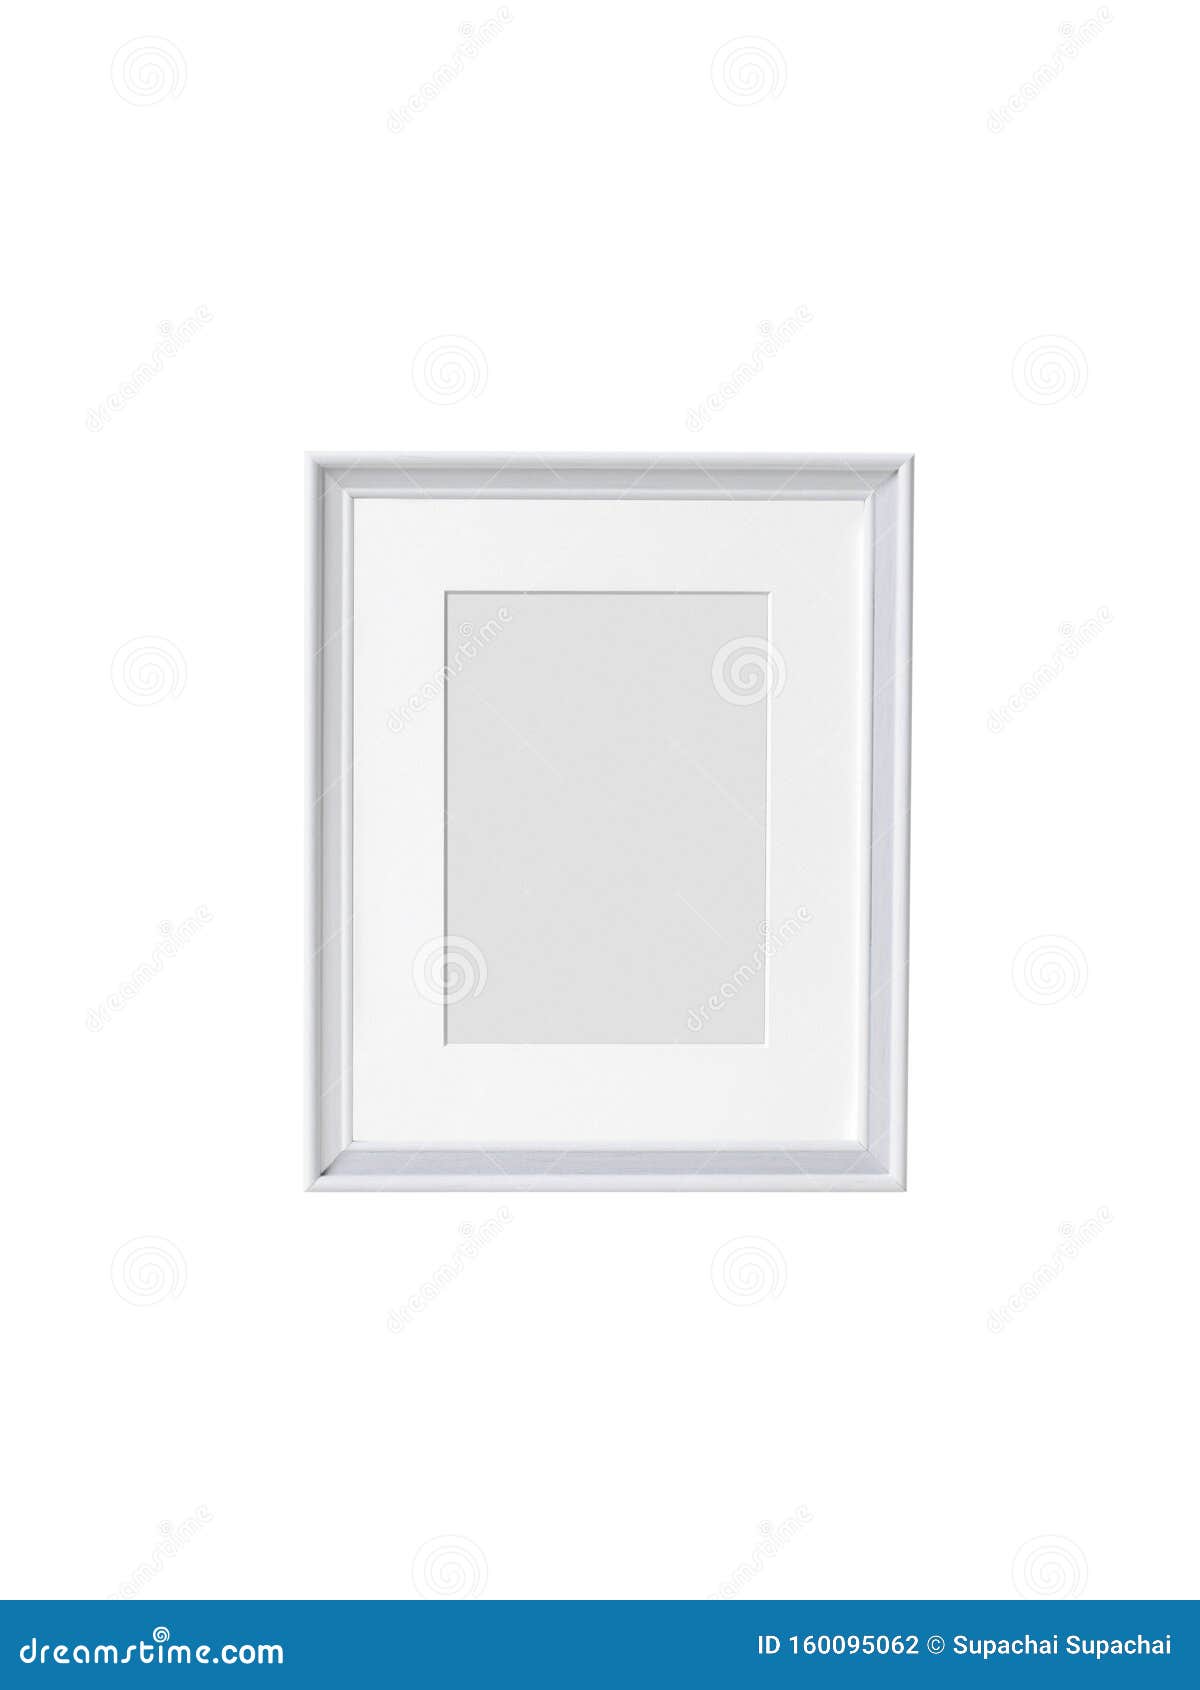 White Photo Frames Isolated On White Background Stock